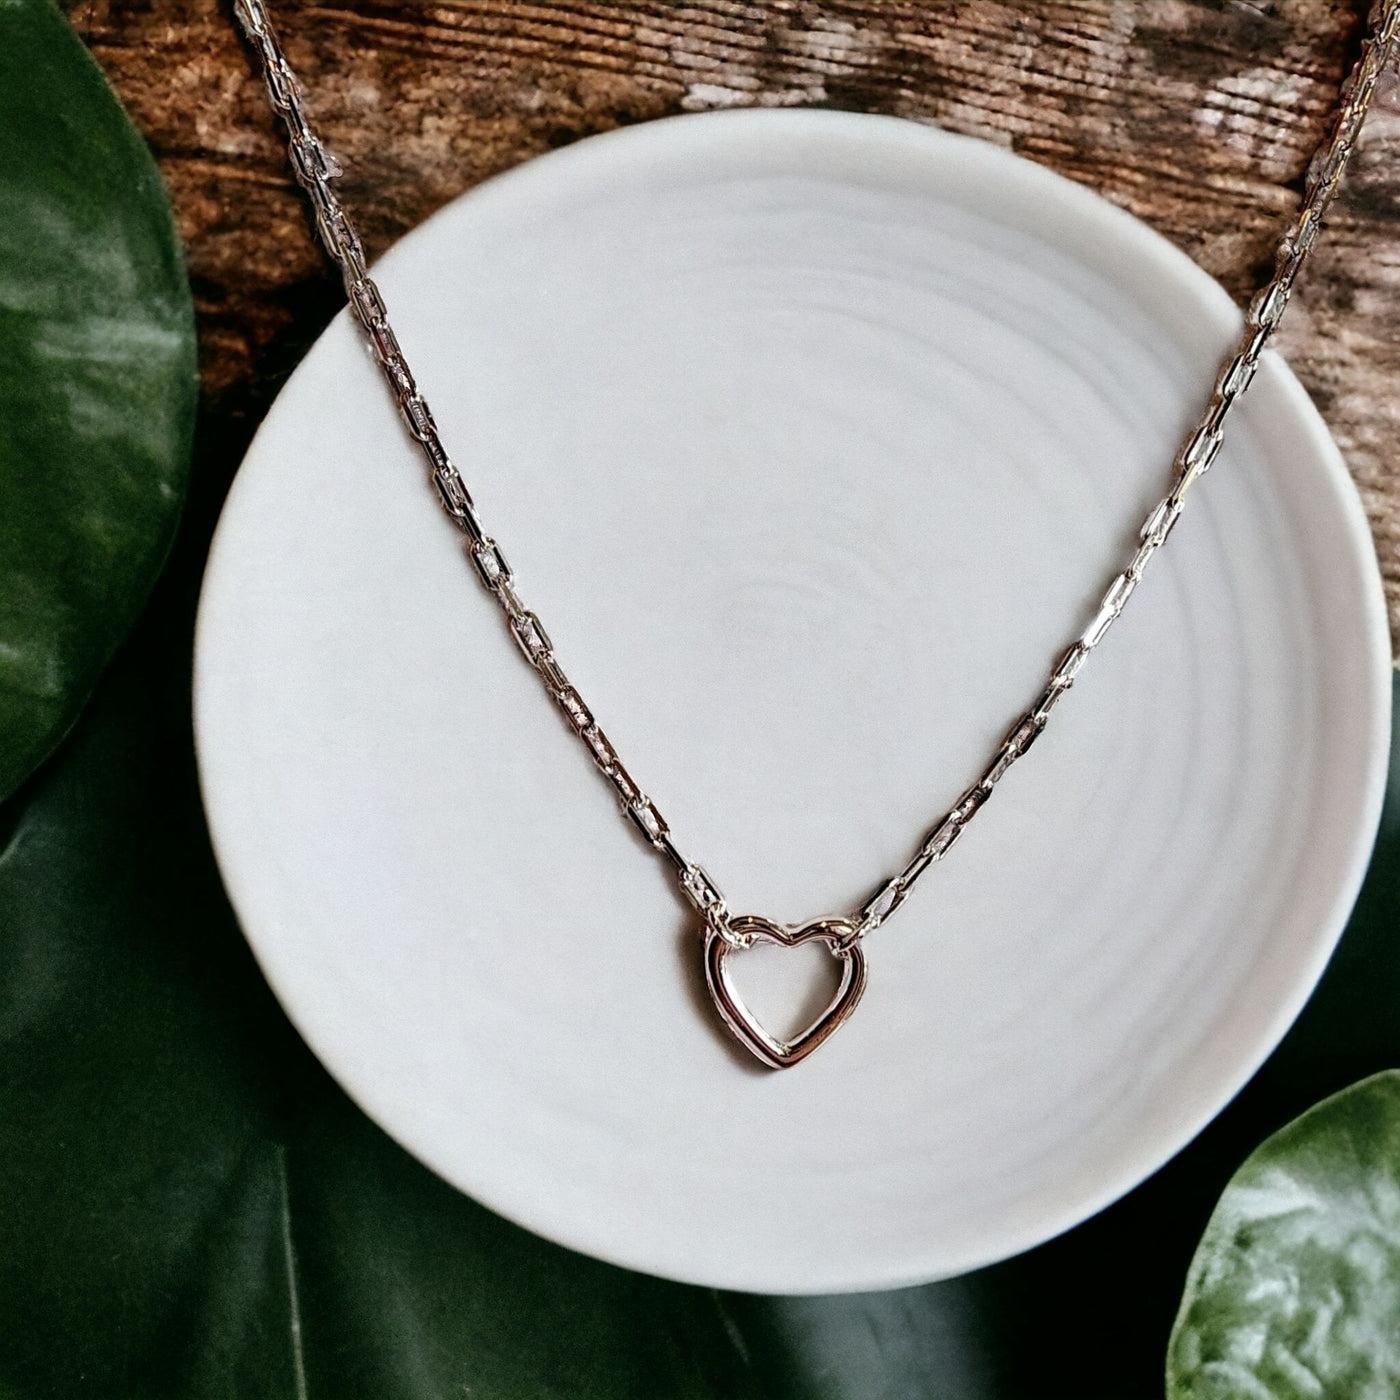 Modern Love Necklace 15 inch Silver